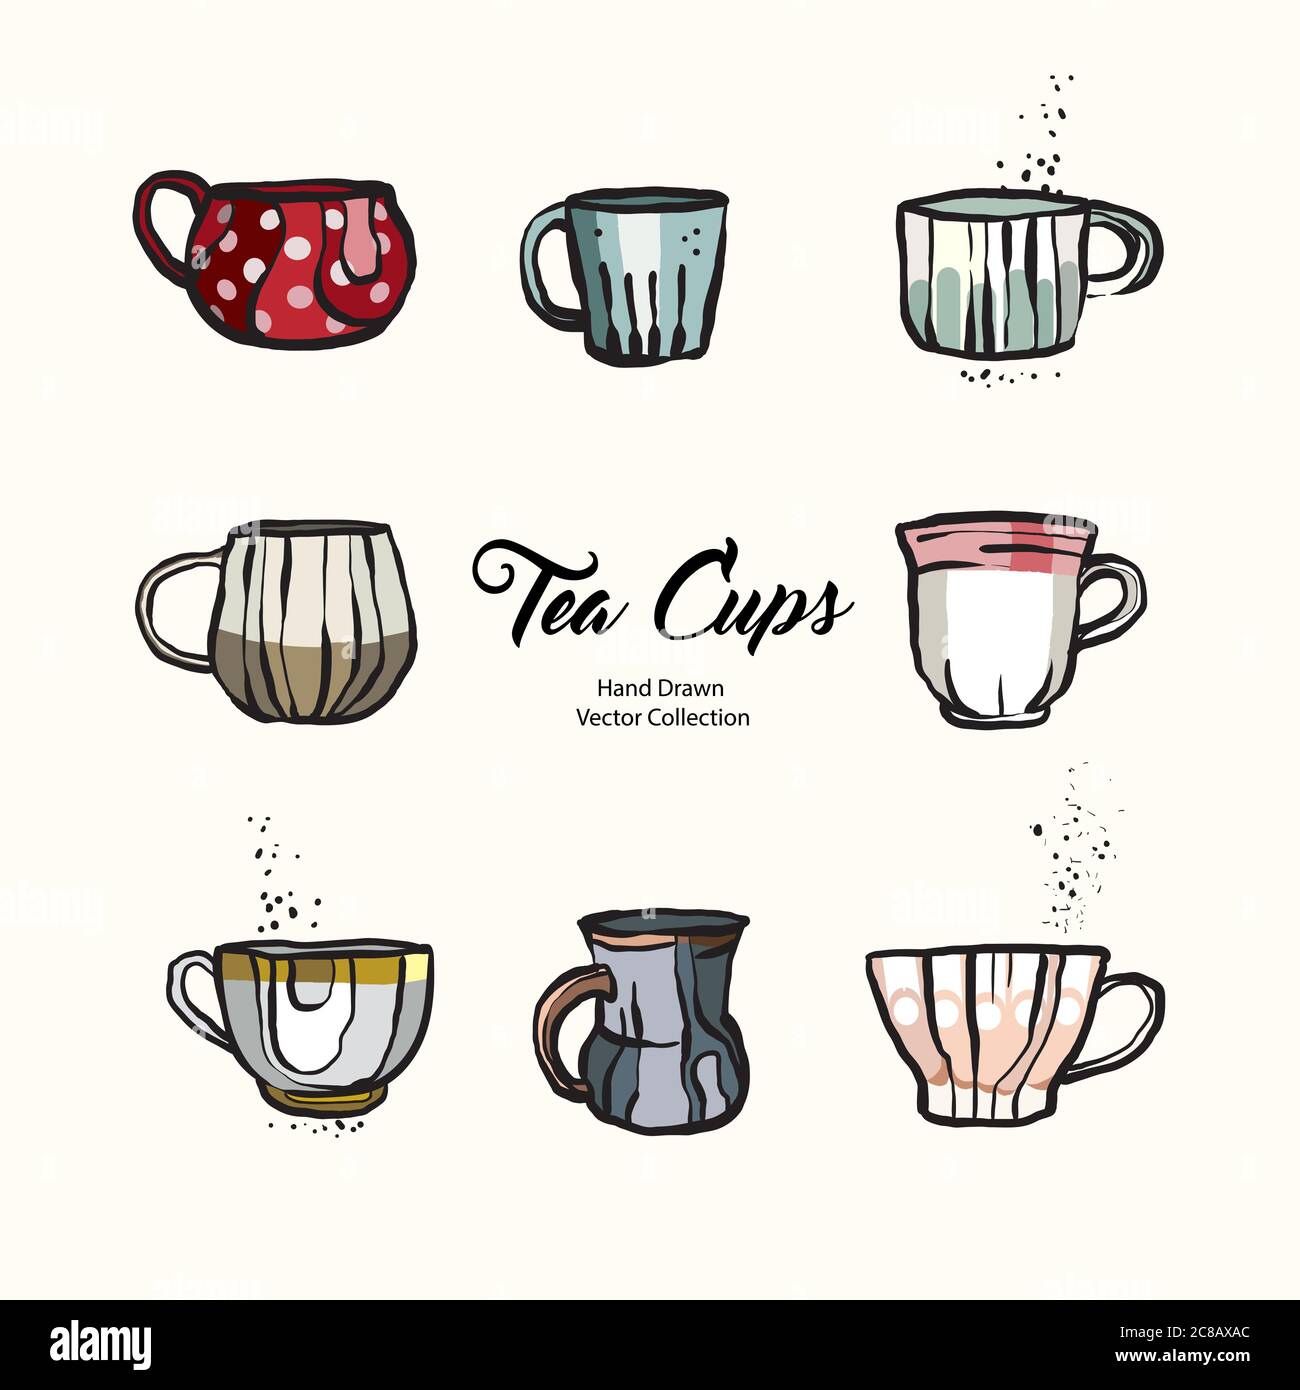 https://c8.alamy.com/comp/2C8AXAC/tea-cup-hand-drawn-vector-illustration-set-old-style-vector-line-illustration-of-isolated-mug-for-cafe-menu-logo-2C8AXAC.jpg